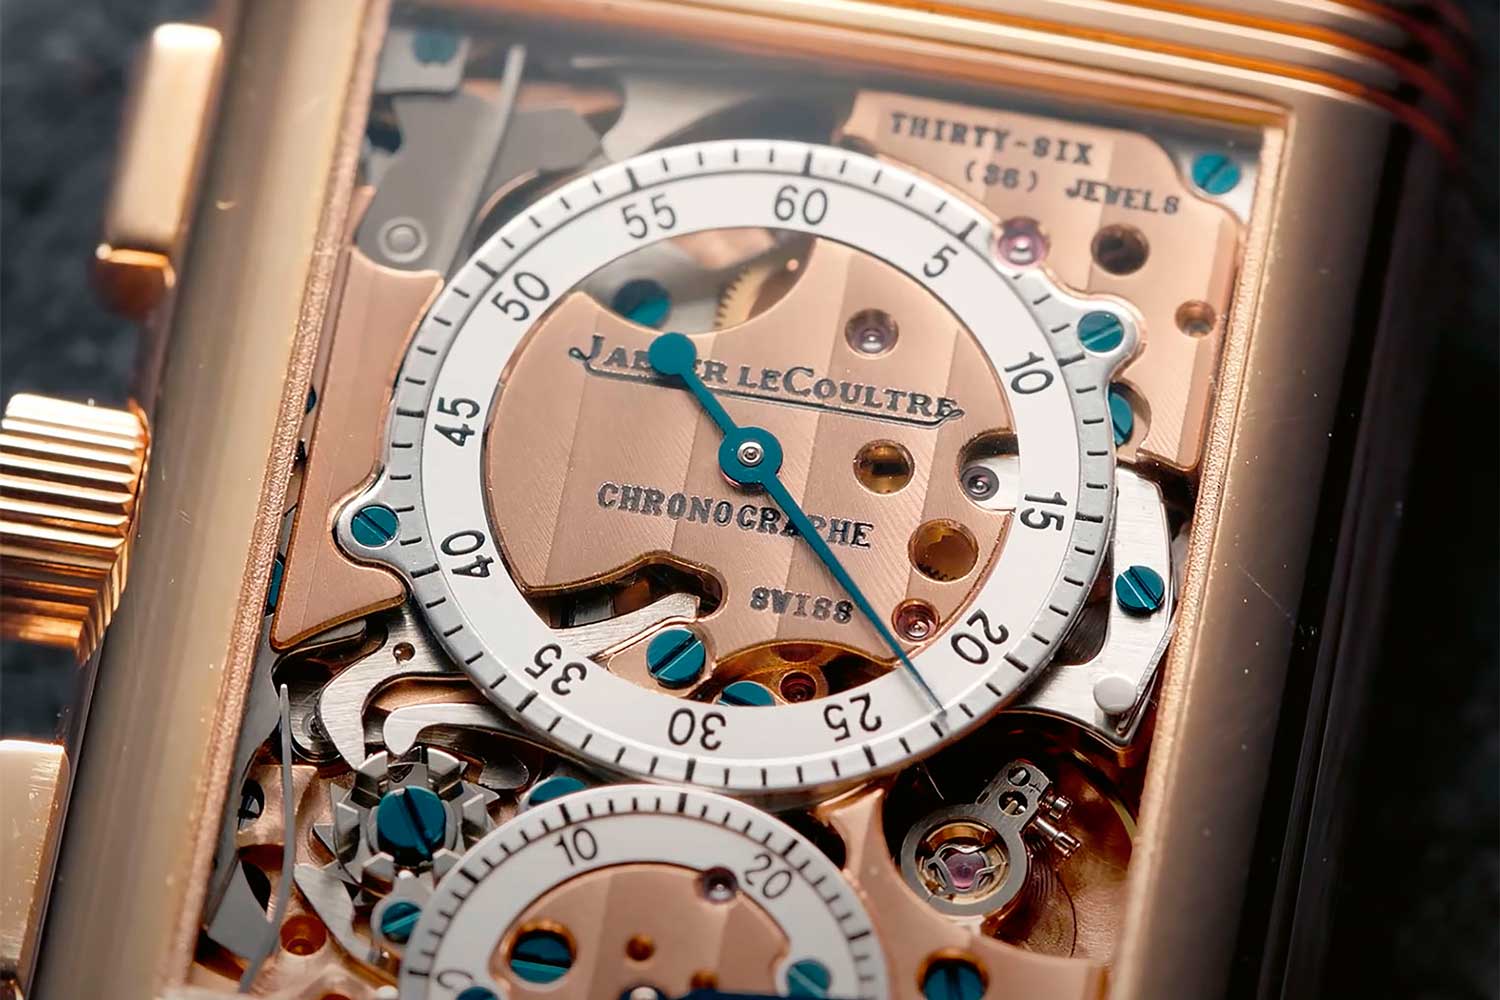 Close-up of the chronograph on the Chronographe Retrograde